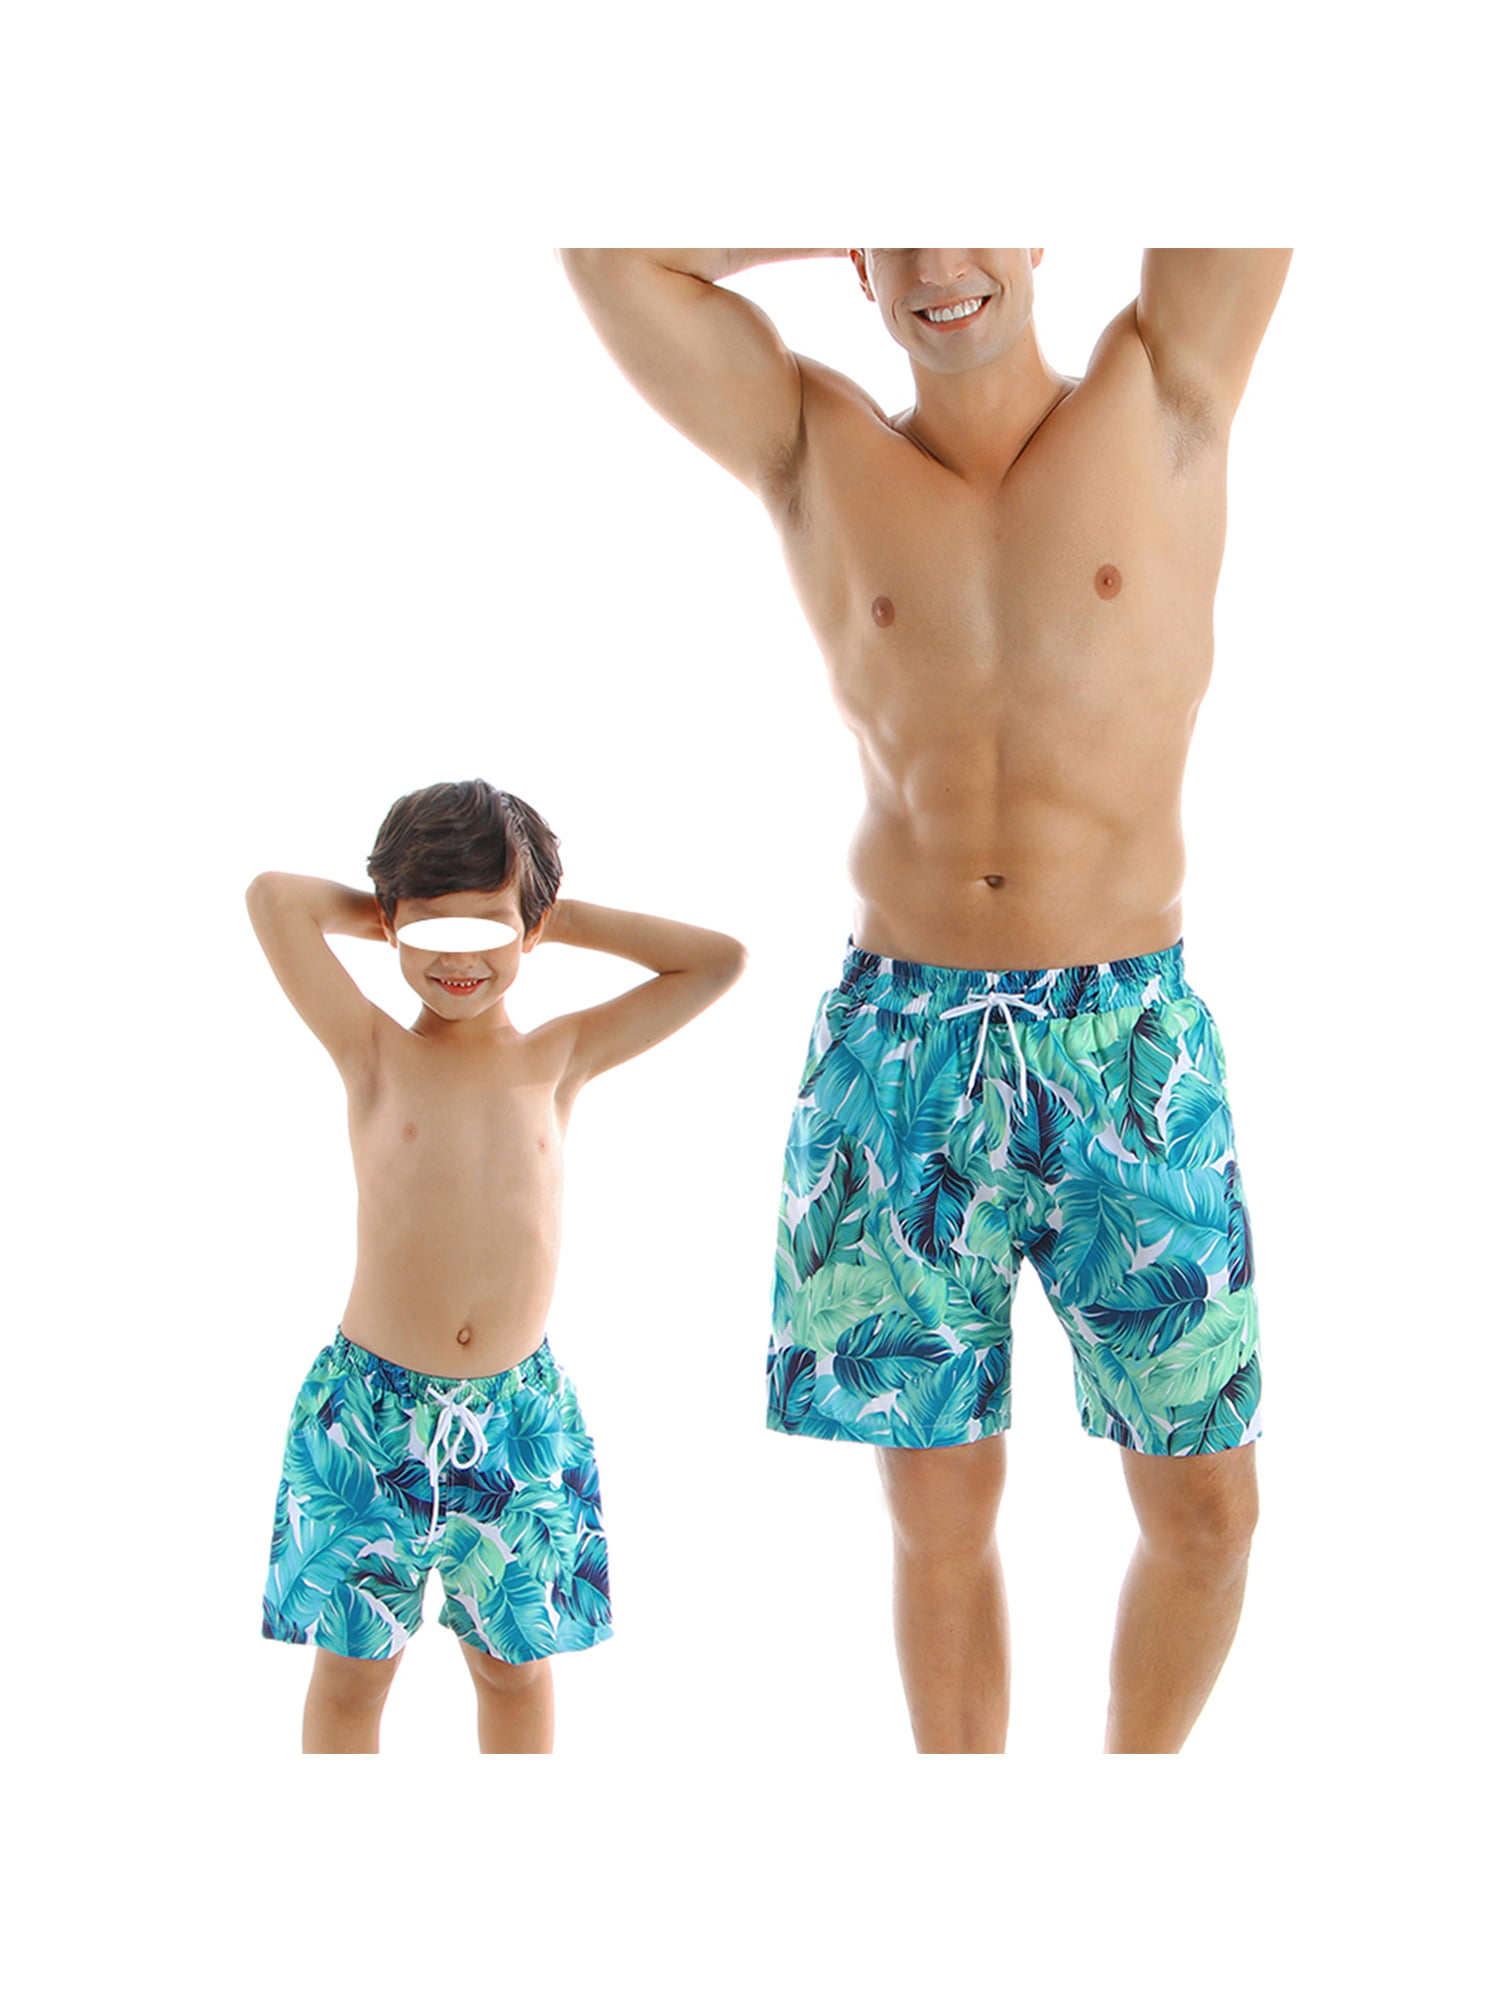 Toddler Infant Baby Boys Floral Flower Swimming Trunks Beach Shorts,Boys Beach Swim Boards Shorts 